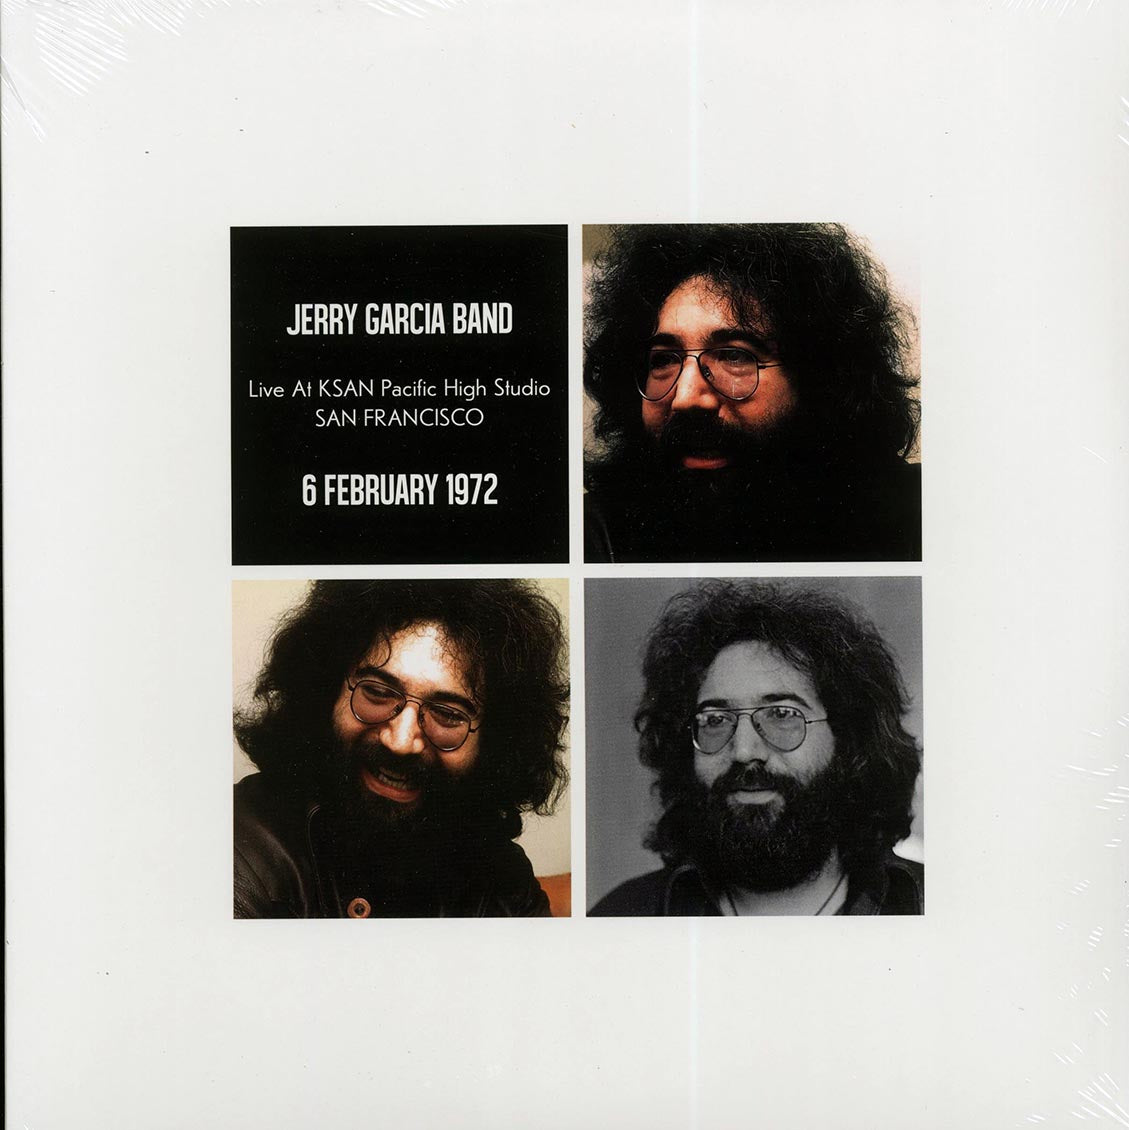 The Jerry Garcia Band - Live At KSAN Pacific High Studio, San Francisco, 6 February 1972 (2xLP) - Vinyl LP